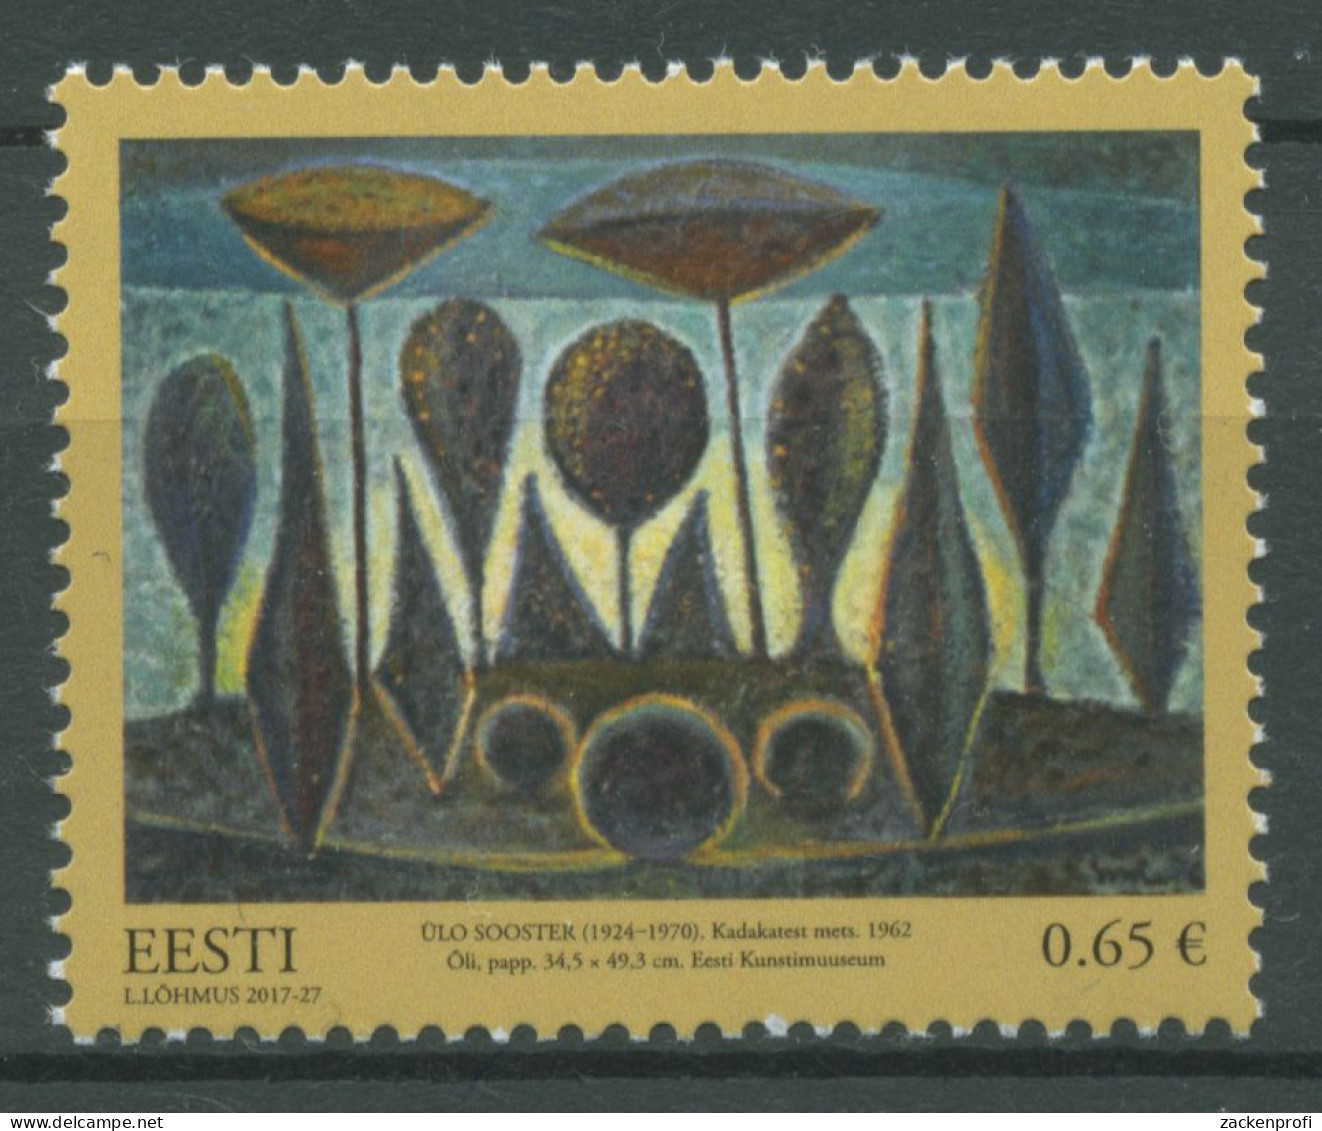 Estland 2017 Kunst Gemälde 904 Postfrisch - Estonia